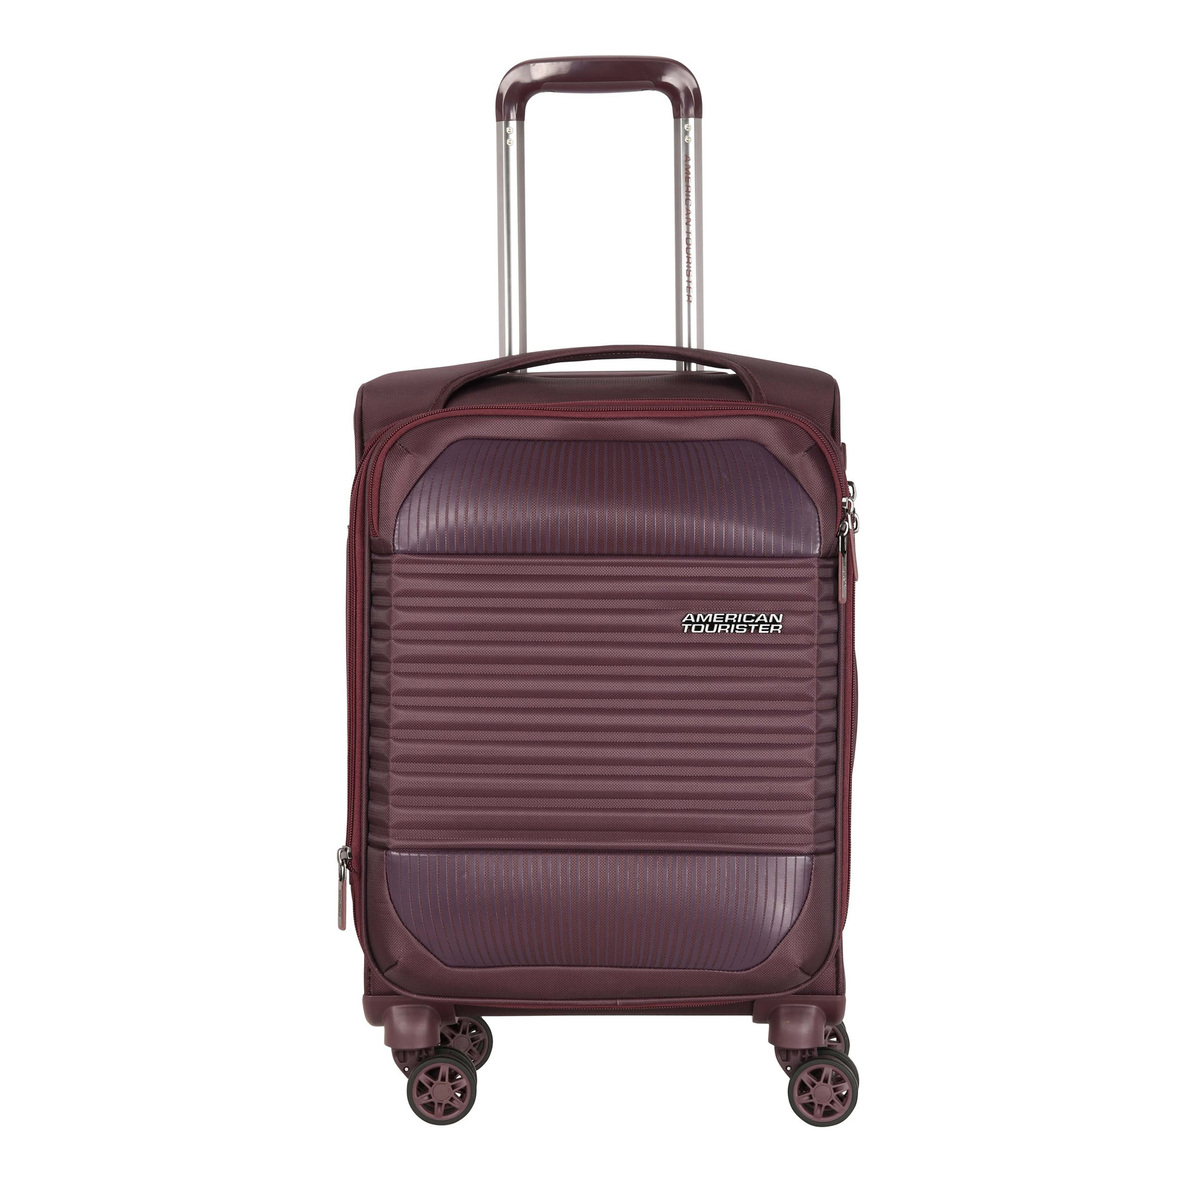 امريكان توريستر حقيبة سفر بعجلات مرنة فورناكس سبينر مع قفل TSA، 66 سم، أحمر داكن